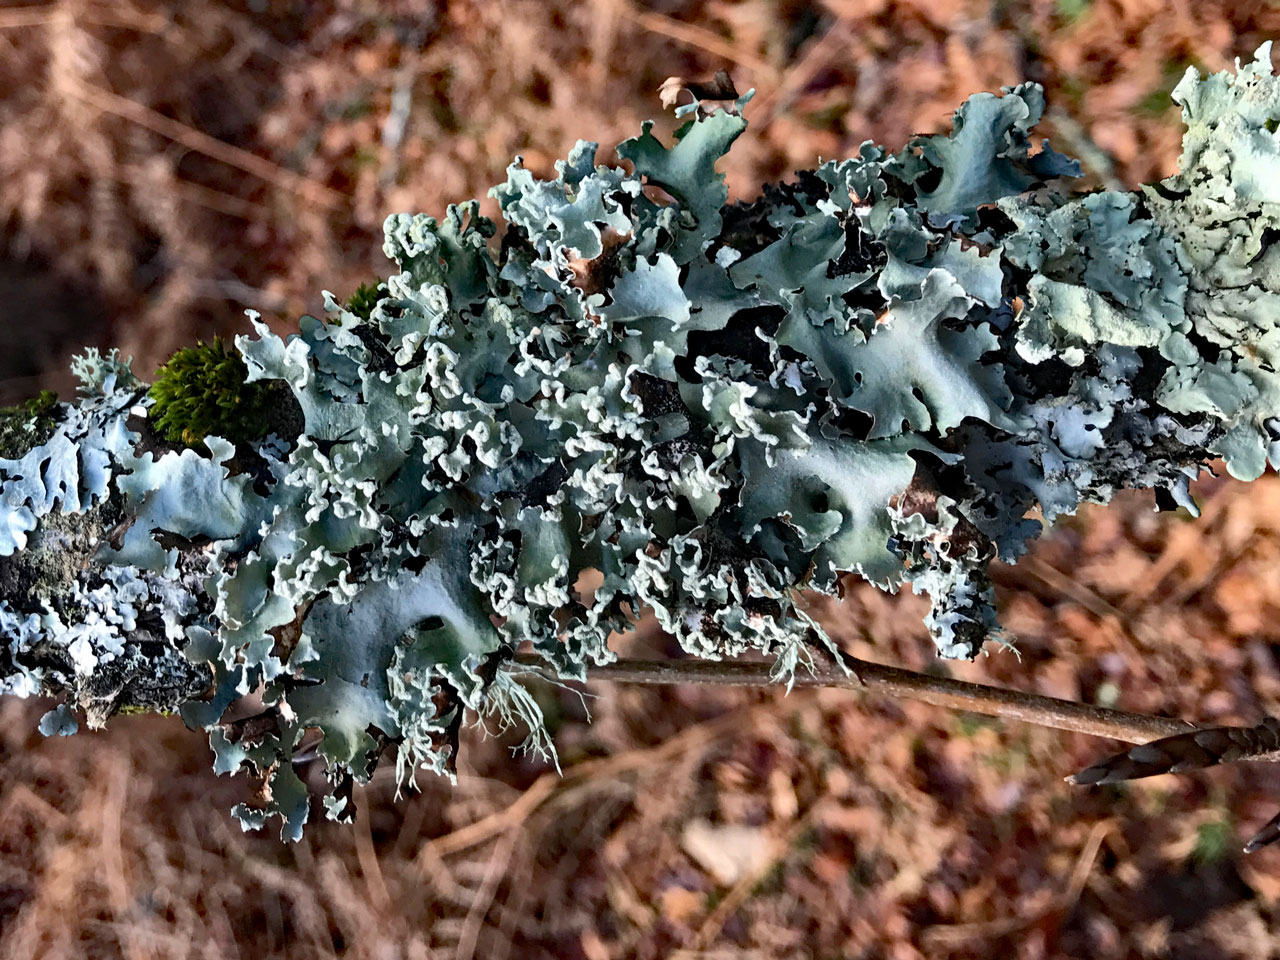 Parmotrema pseudoreticulatum, Beech twig, Mark Ash Wood, New Forest